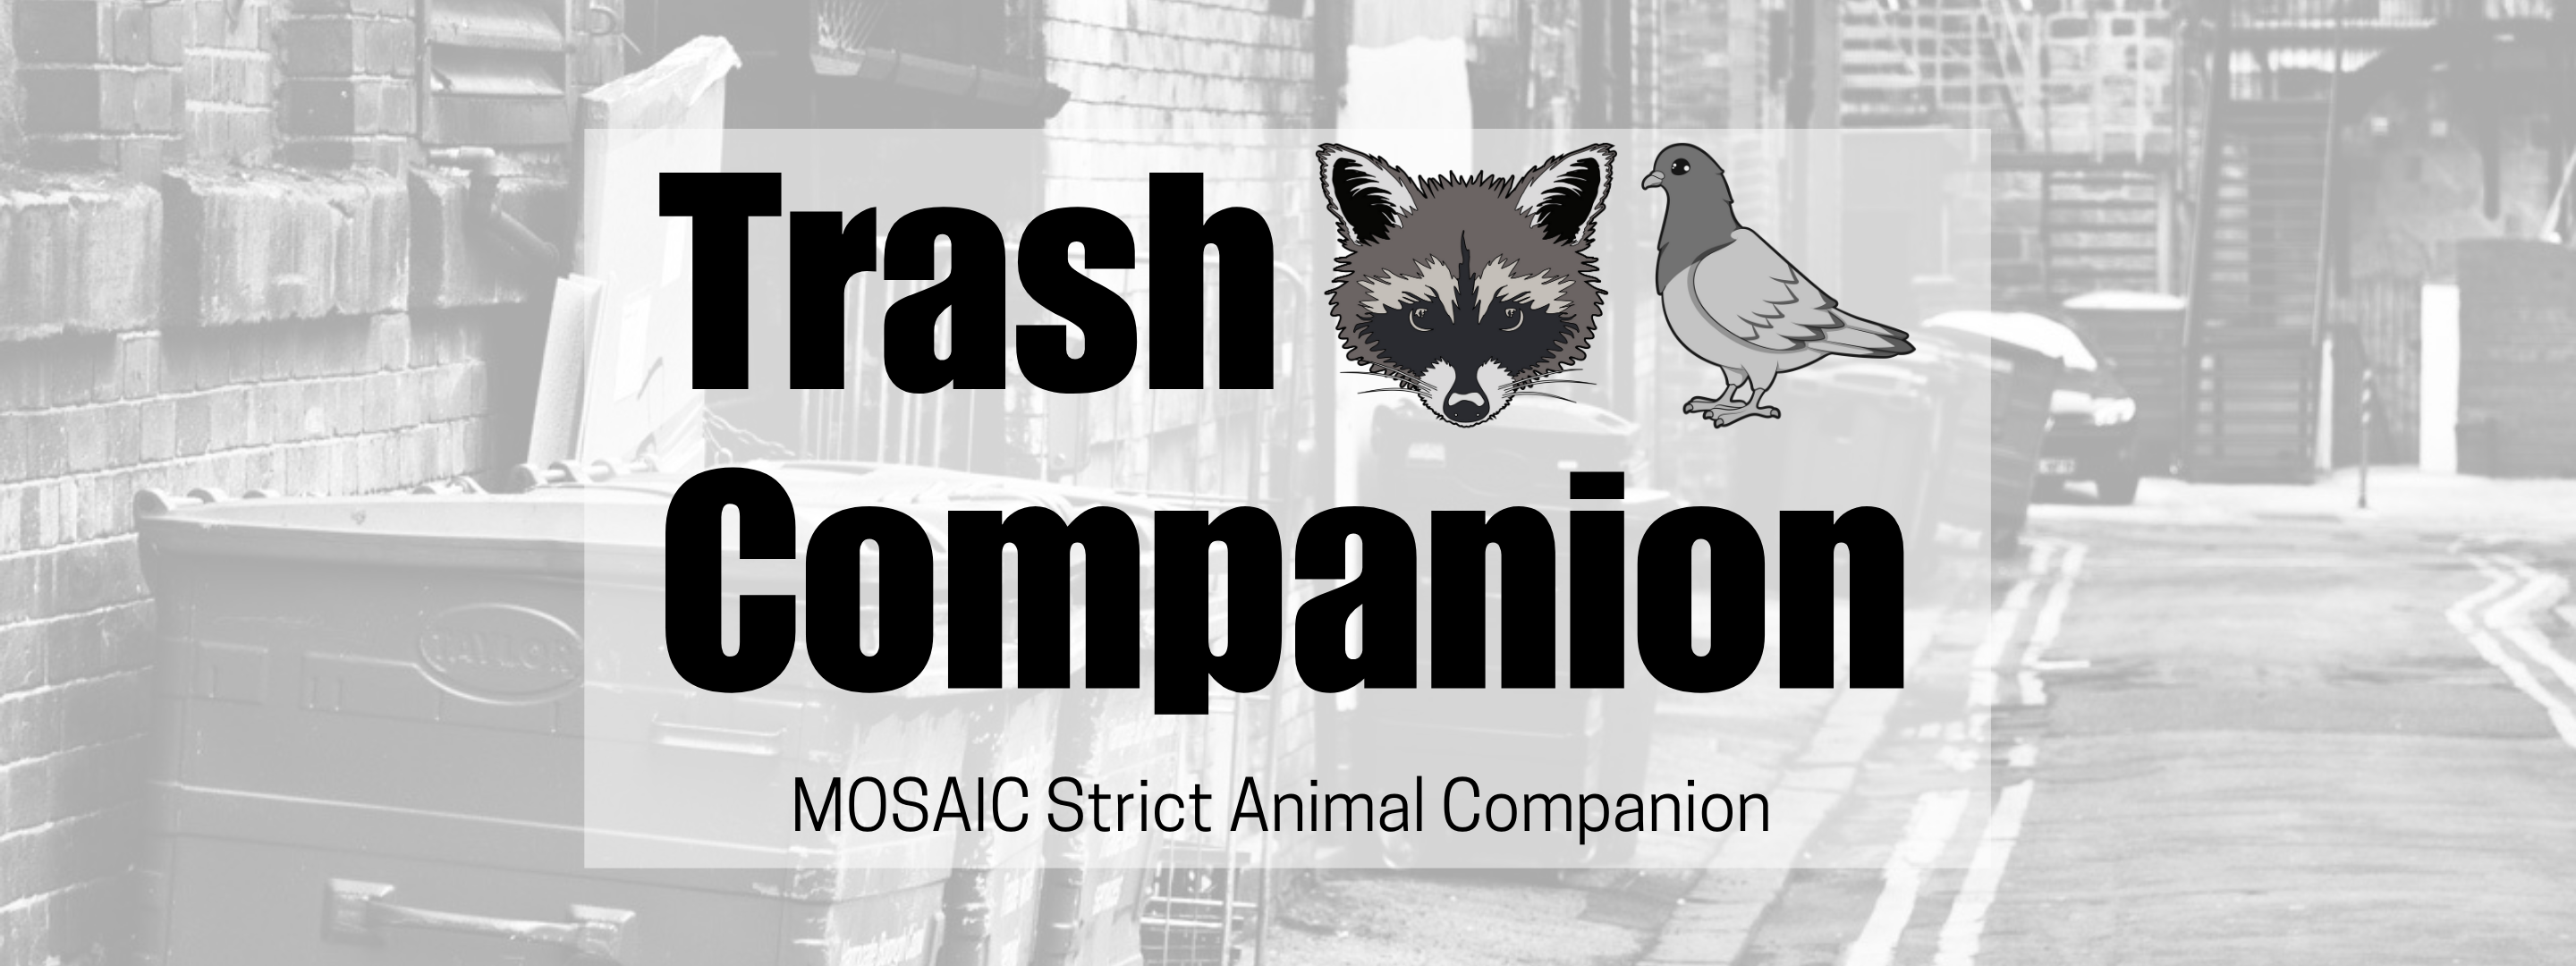 Trash Companion